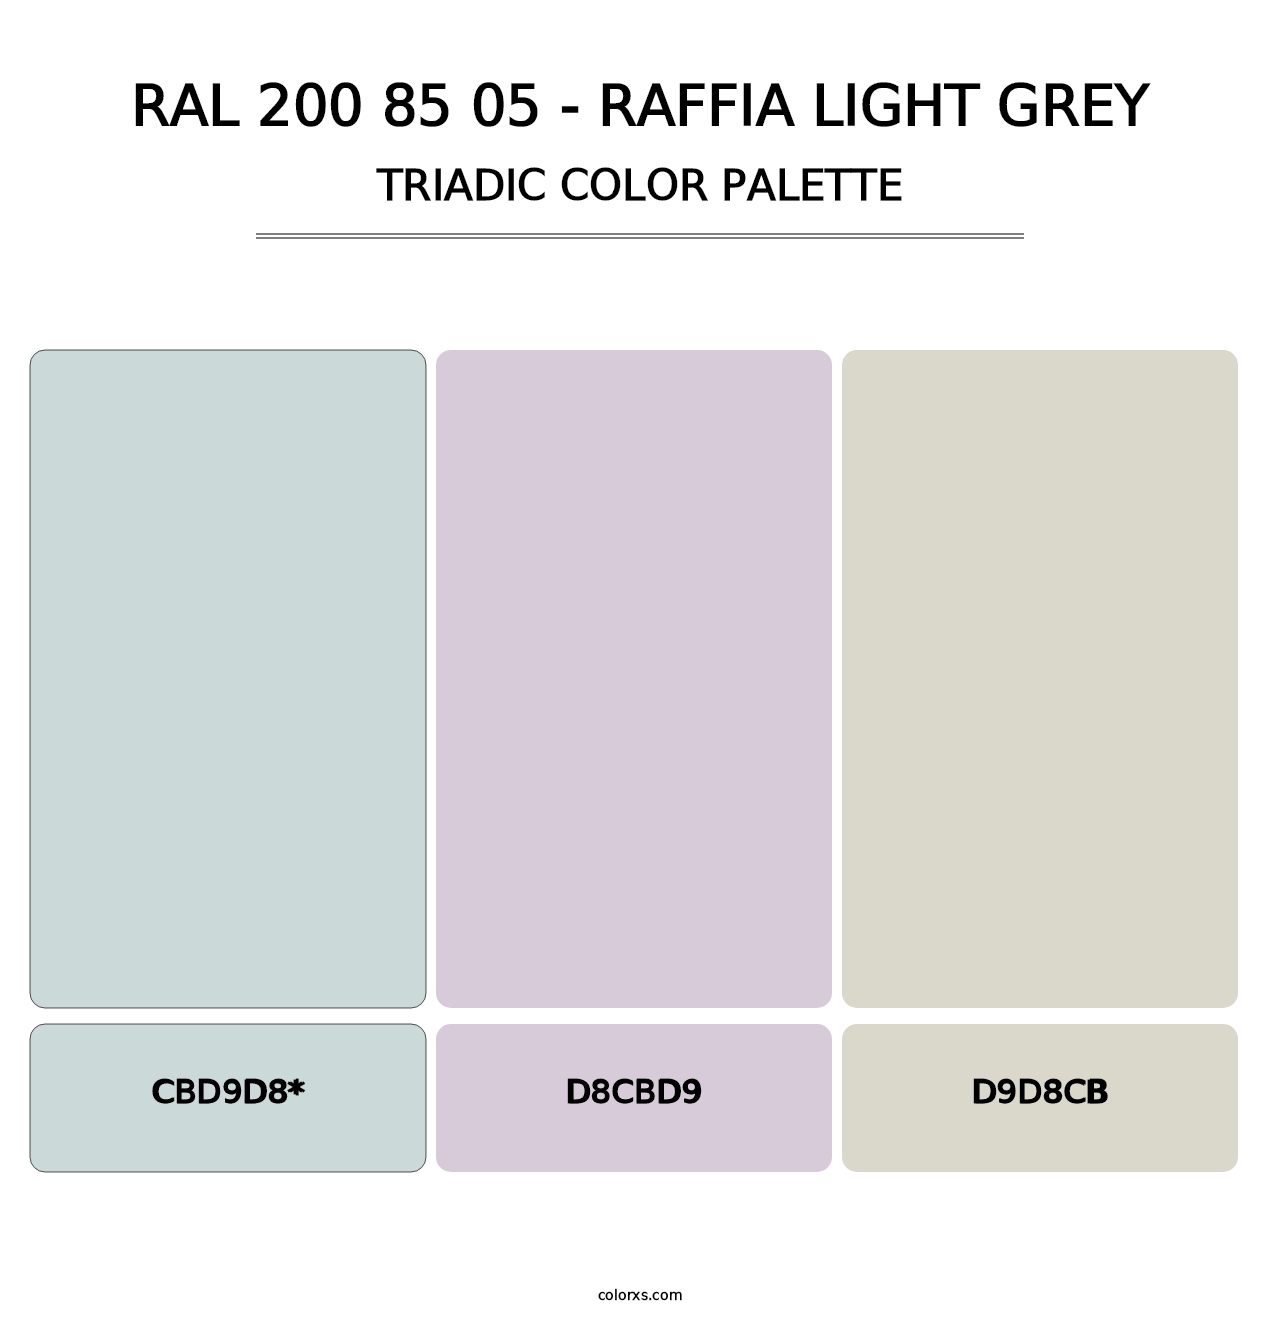 RAL 200 85 05 - Raffia Light Grey - Triadic Color Palette